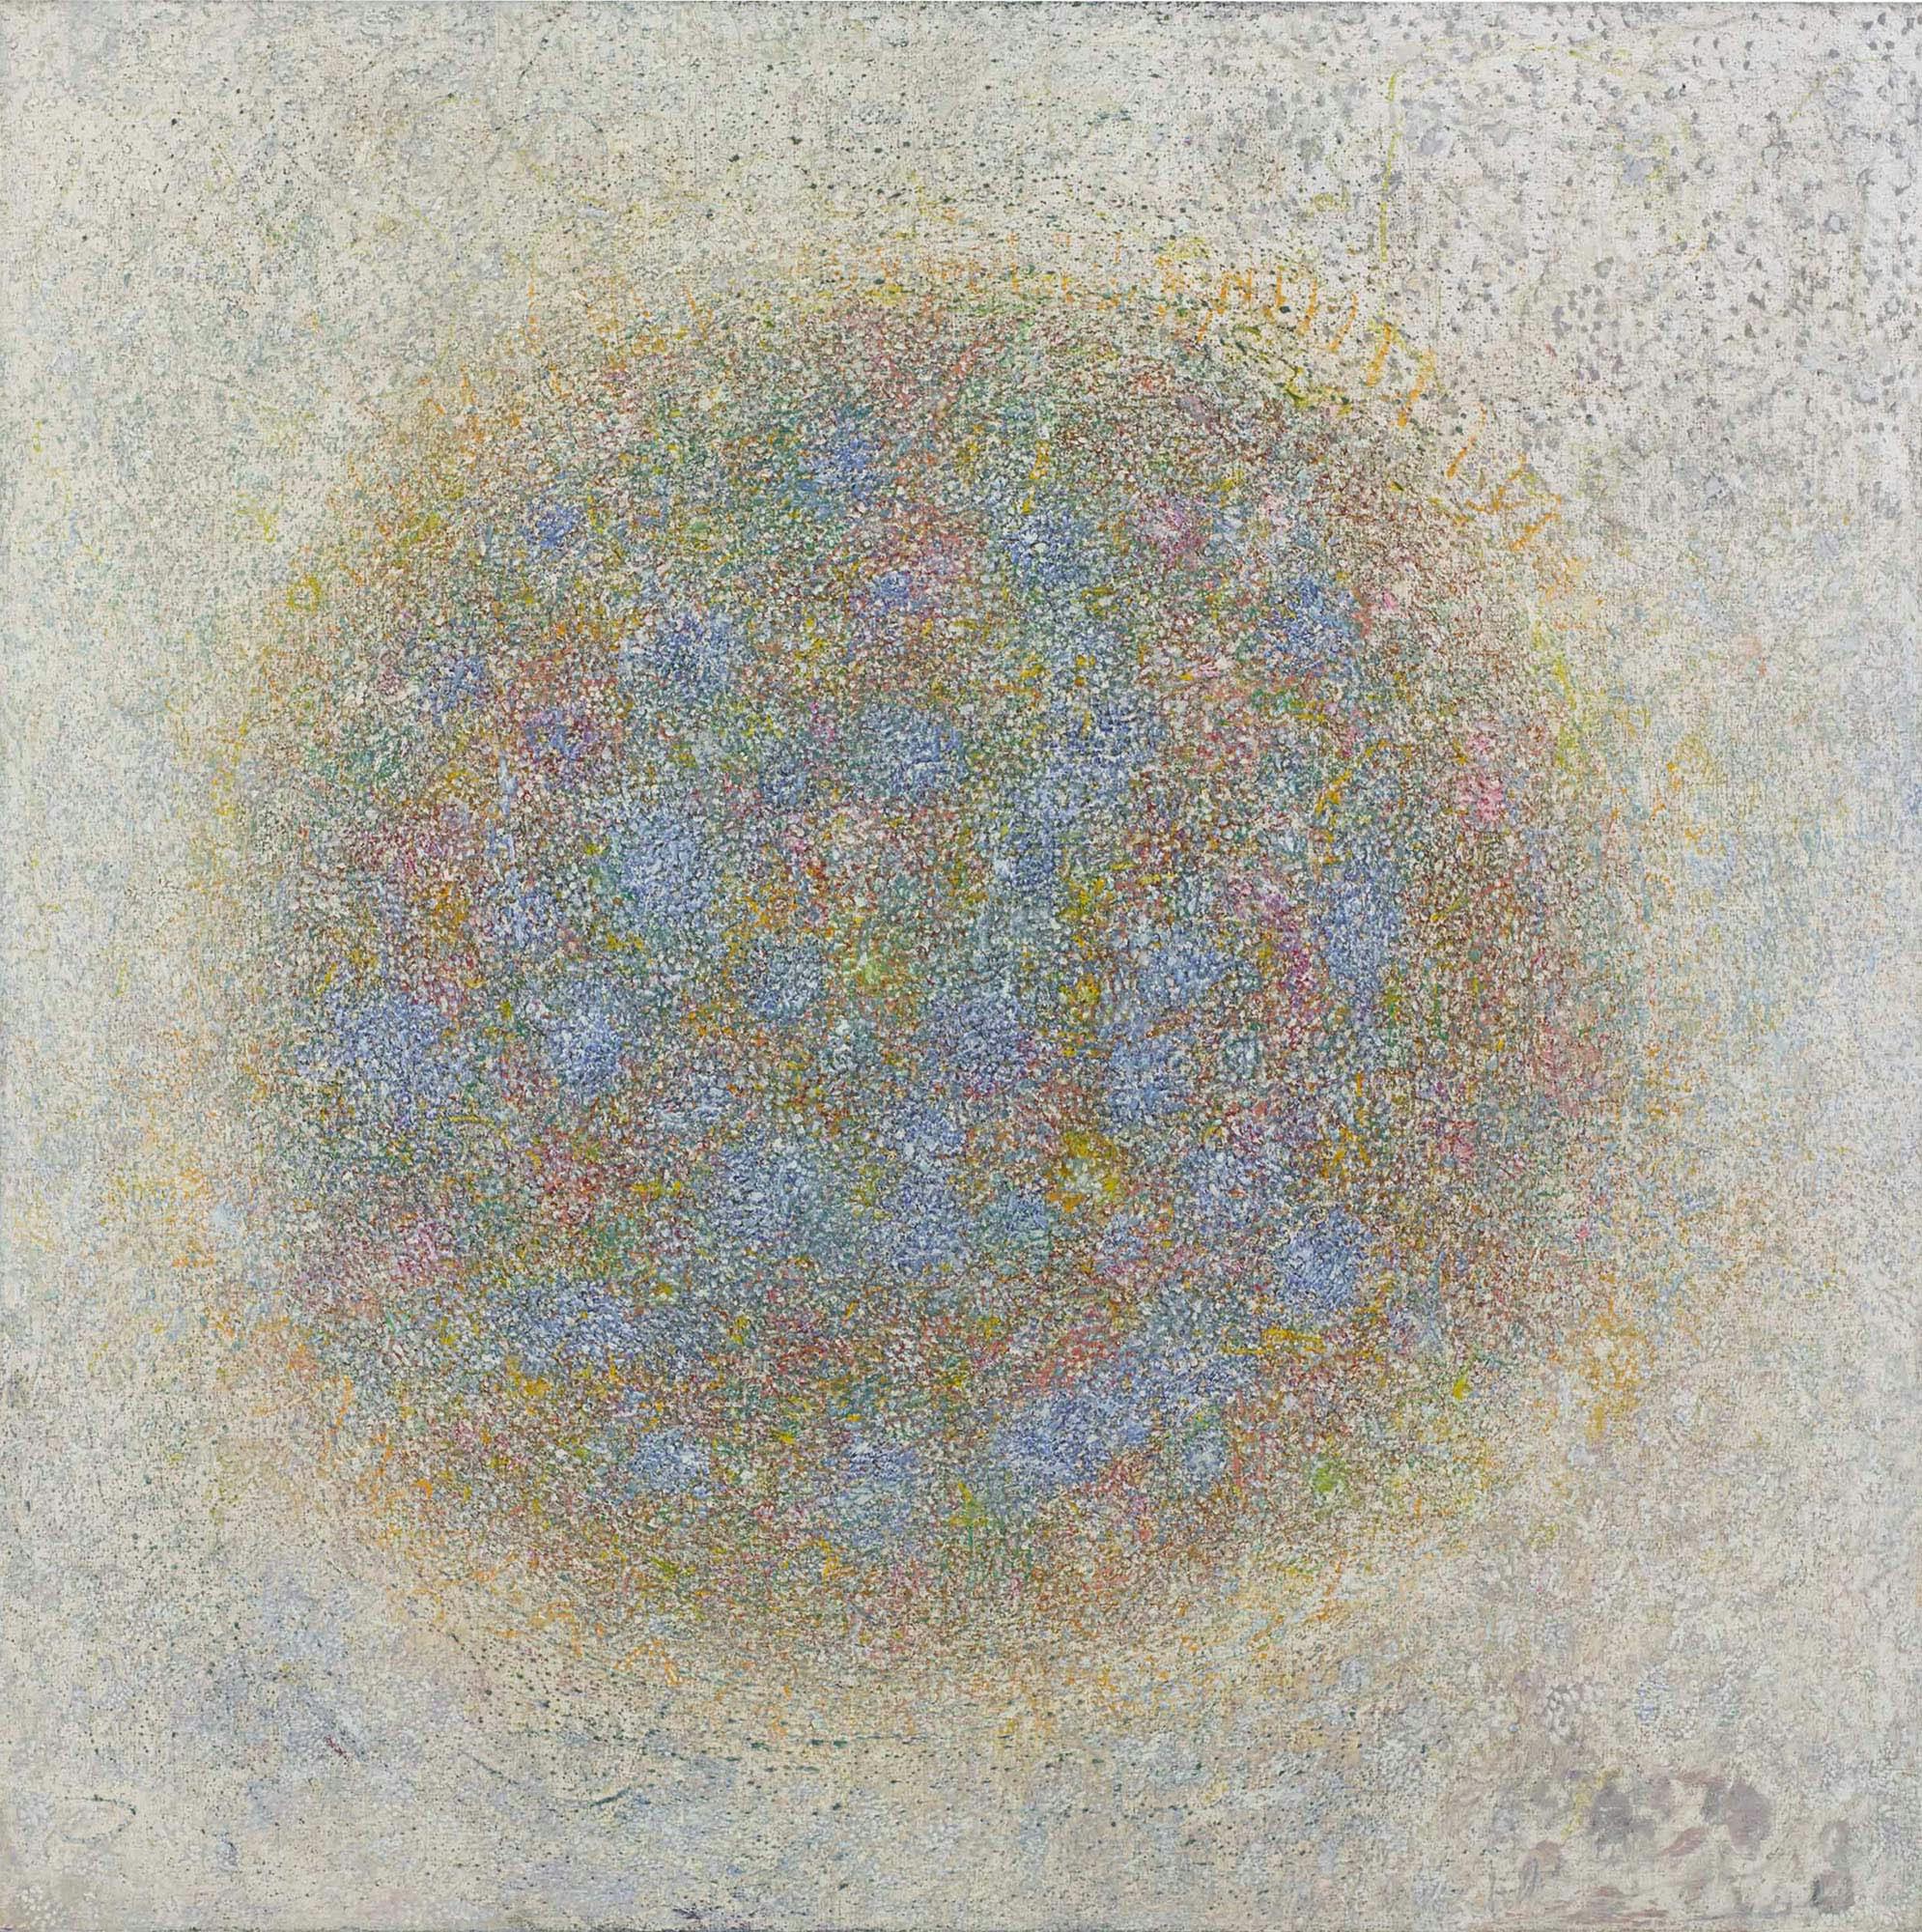 Genesis
1974–81
Oil on linen
90 x 90 in. (228.6 x 228.6 cm)
 – The Richard Pousette-Dart Foundation